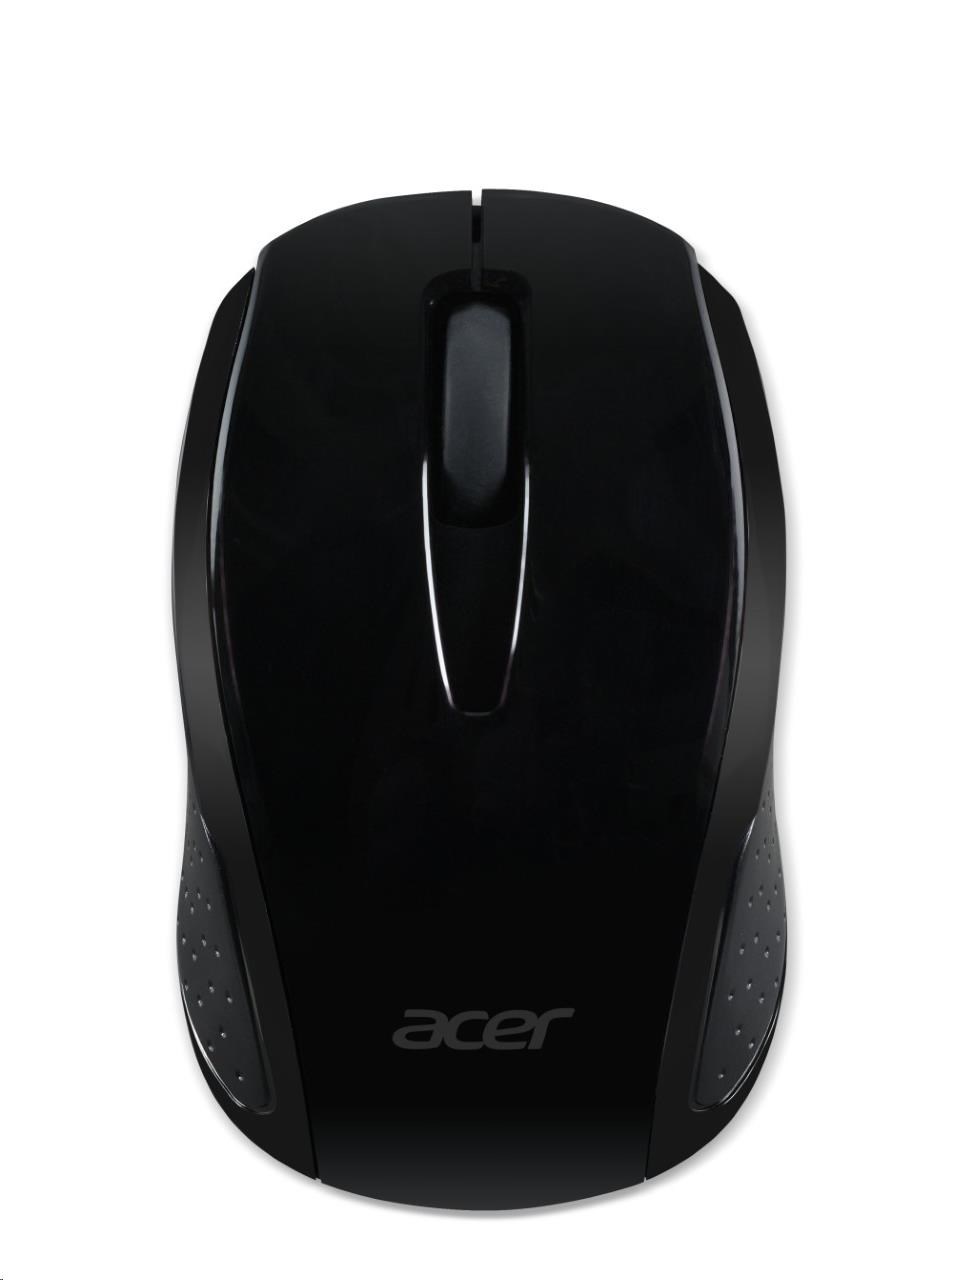 Bezdrôtová myš ACER G69 Black - RF2.4G,  1600 dpi,  95x58x35 mm,  dosah 10 m,  2x AAA,  Win/ Chrome/ Mac,  (maloobchodné baleni1 